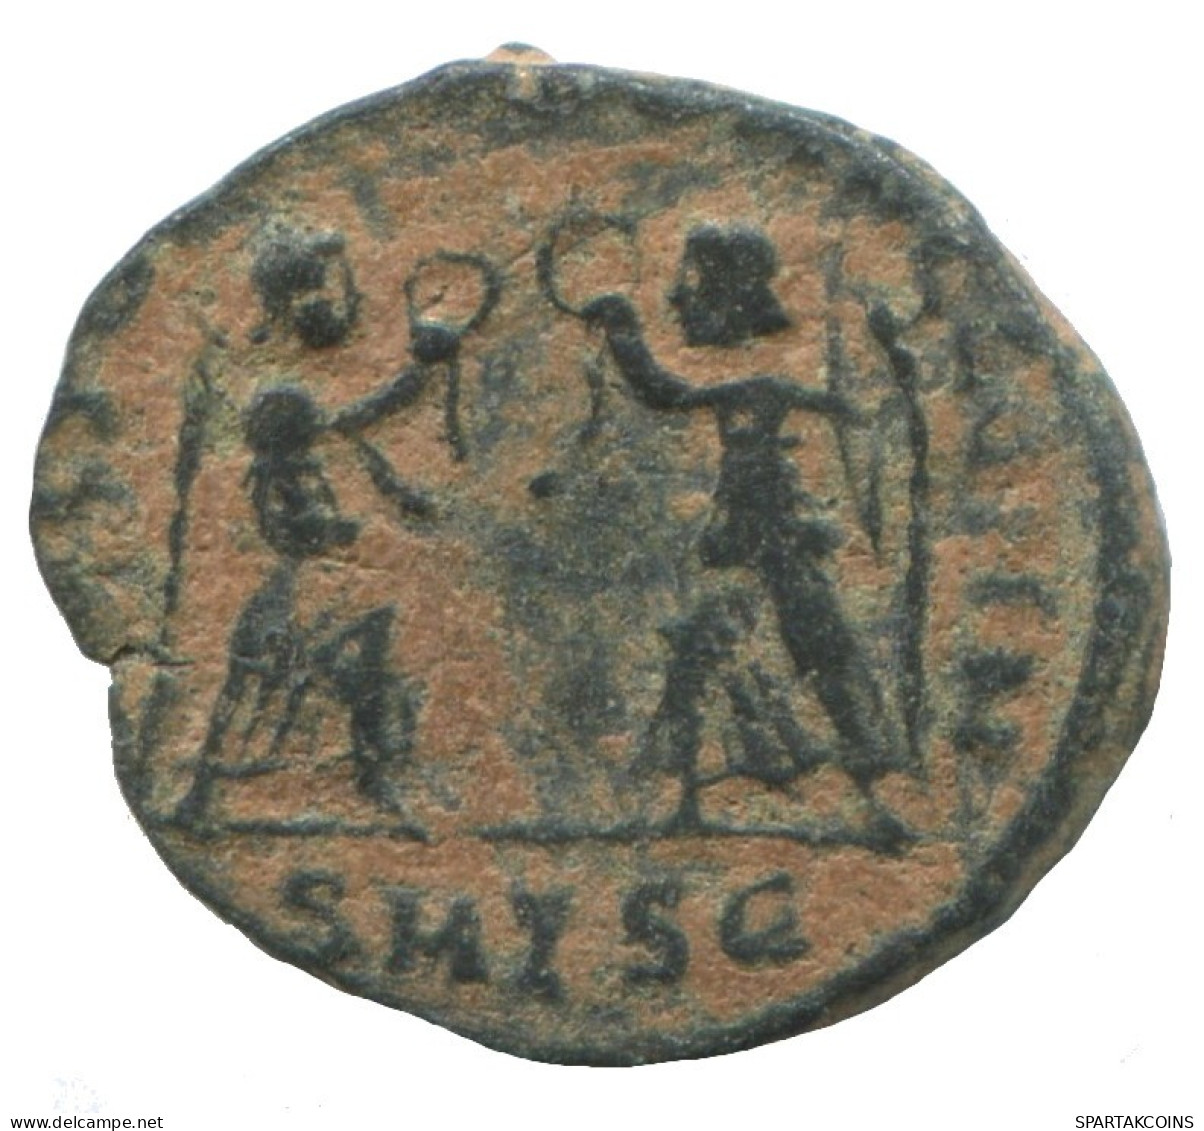 CONSTANTIUS II THESSALONICA SMTSE VICTORIAE DDAVGGQNN 1.6g/16m #ANN1439.10.F.A - L'Empire Chrétien (307 à 363)